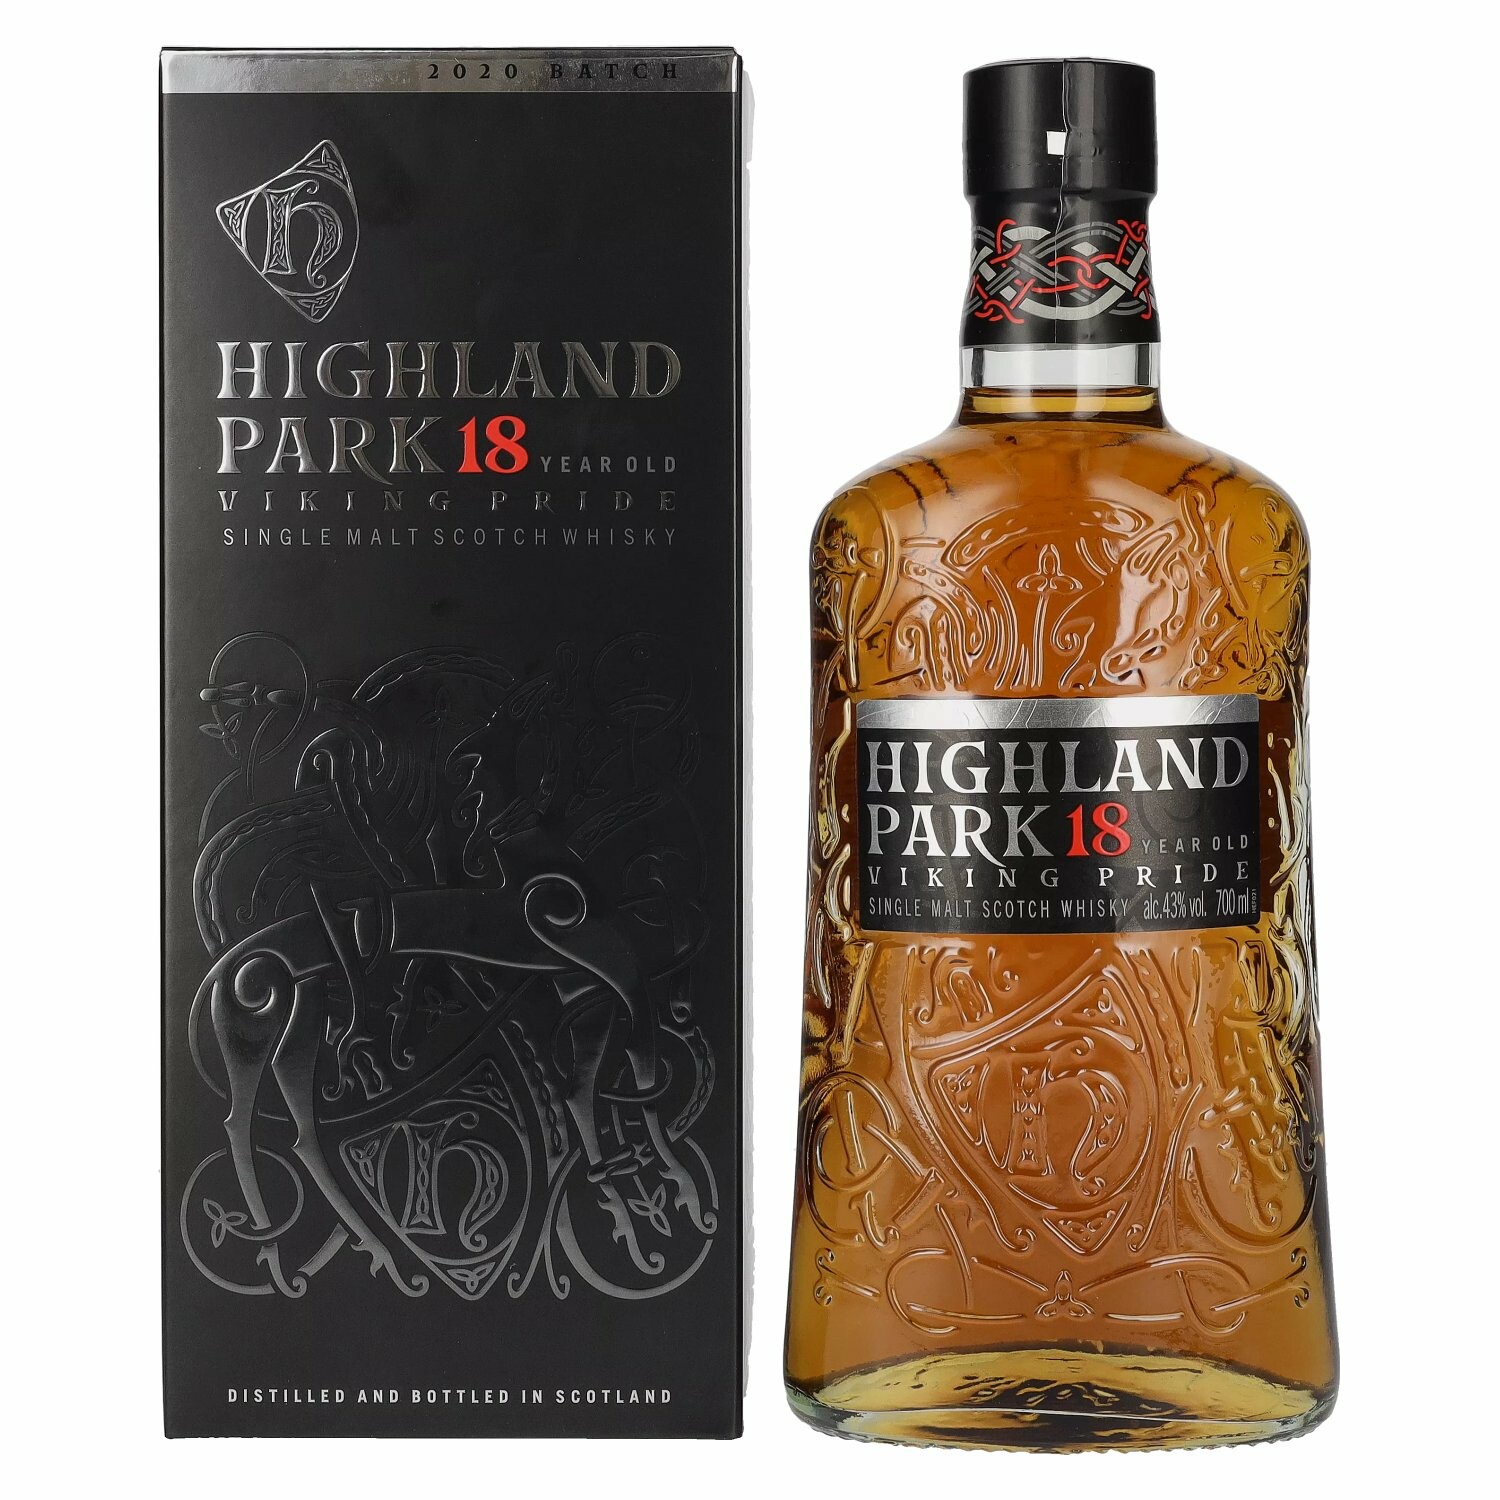 Highland Park 18 Years Old VIKING PRIDE 43% Vol. 0,7l in Giftbox